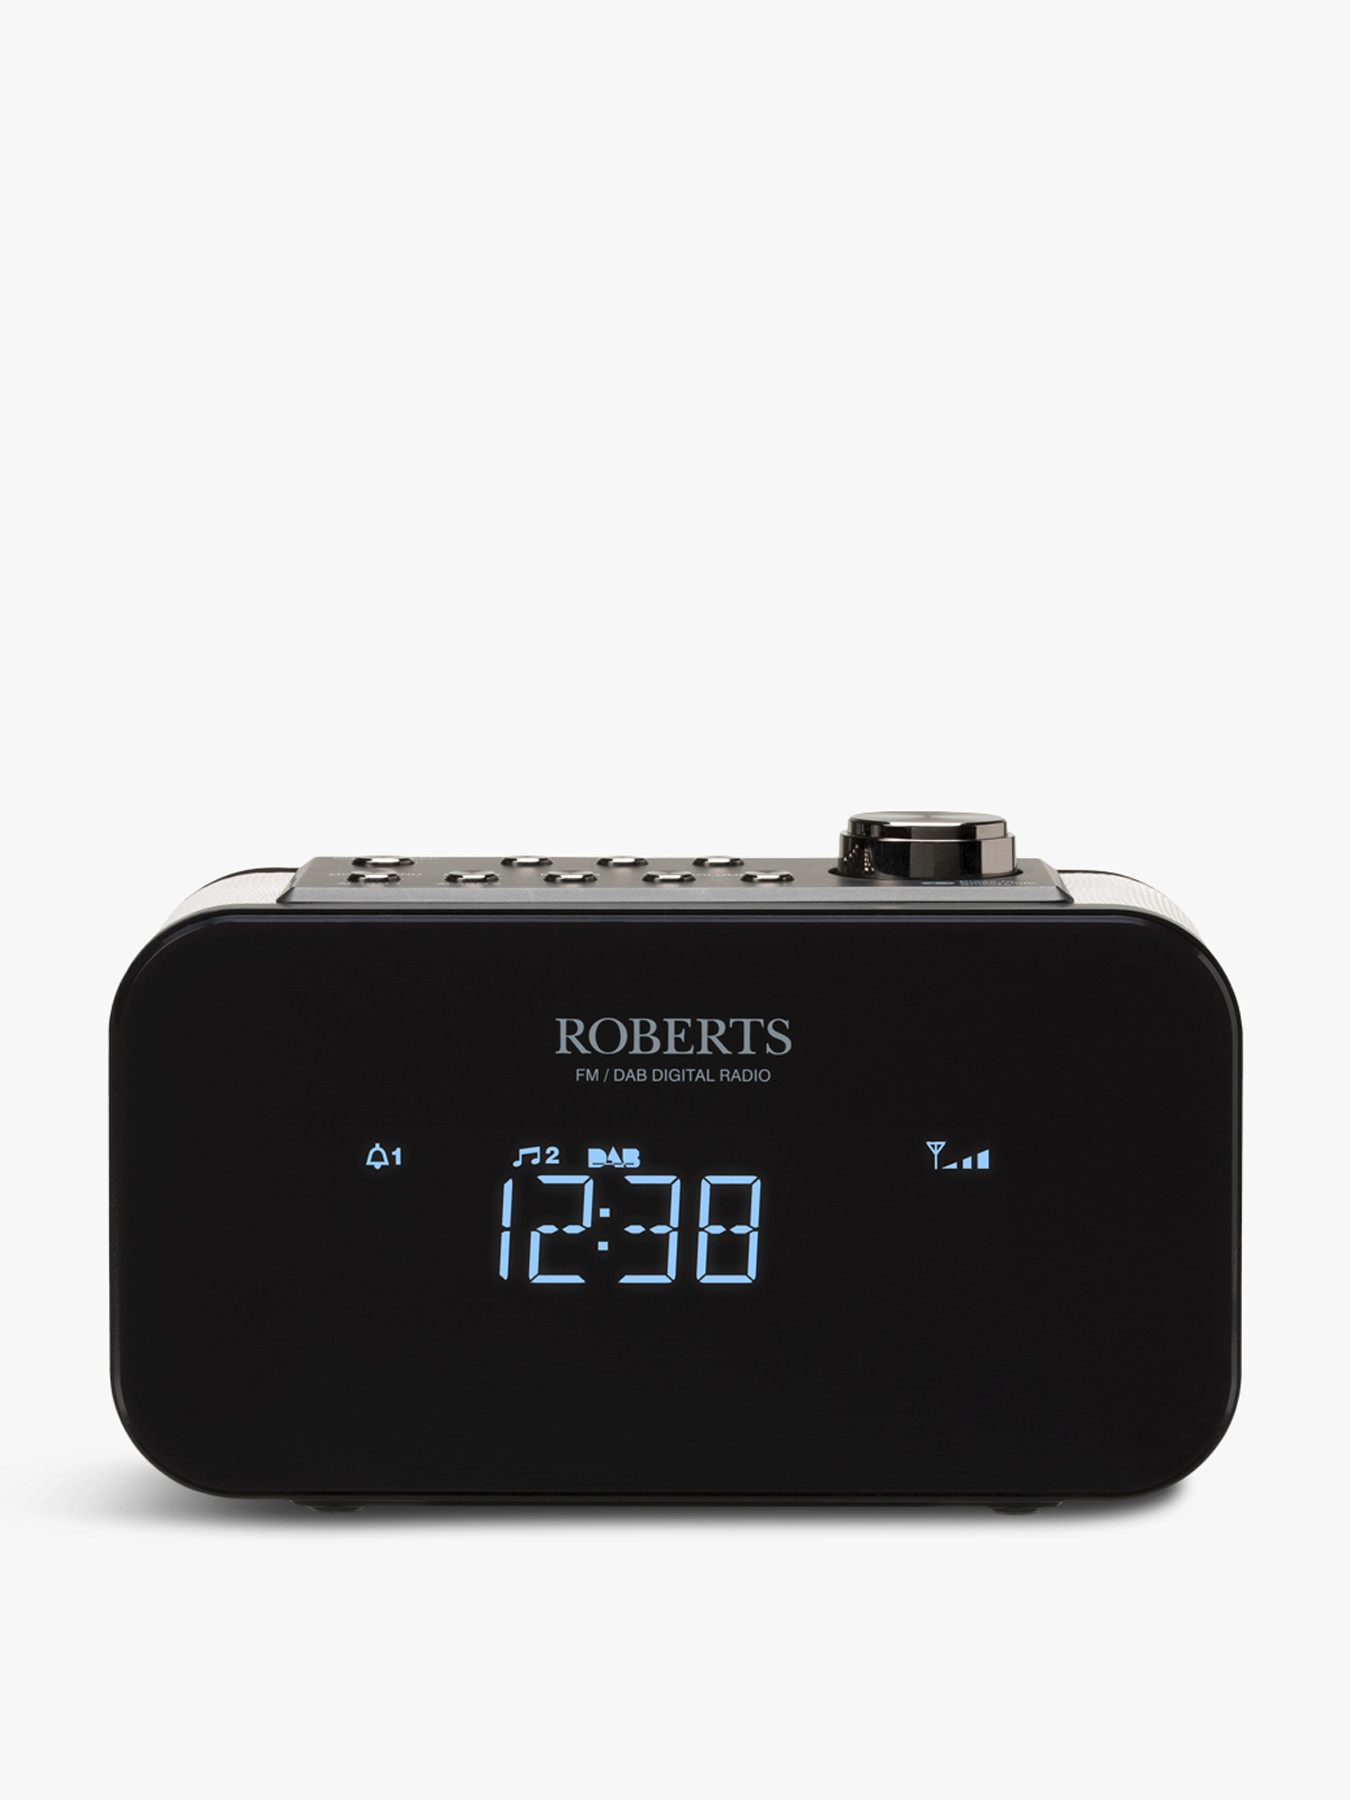 Roberts Ortus 2 DAB/DAB+/FM Alarm Clock Radio | Fenwick